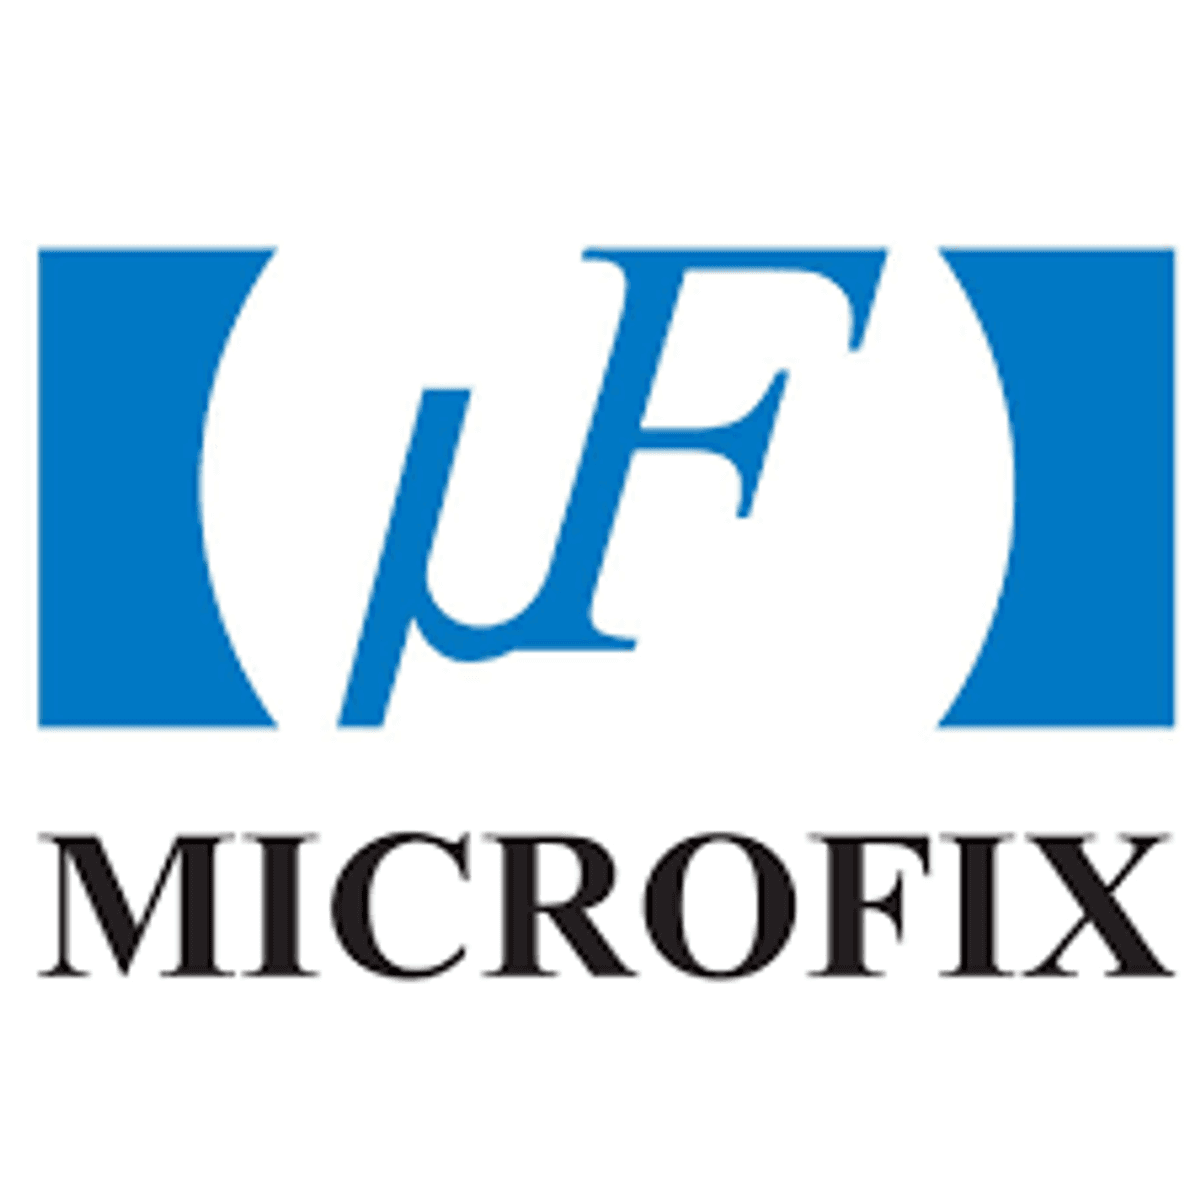 MicroFix opent Apple service centrum in Amsterdam image